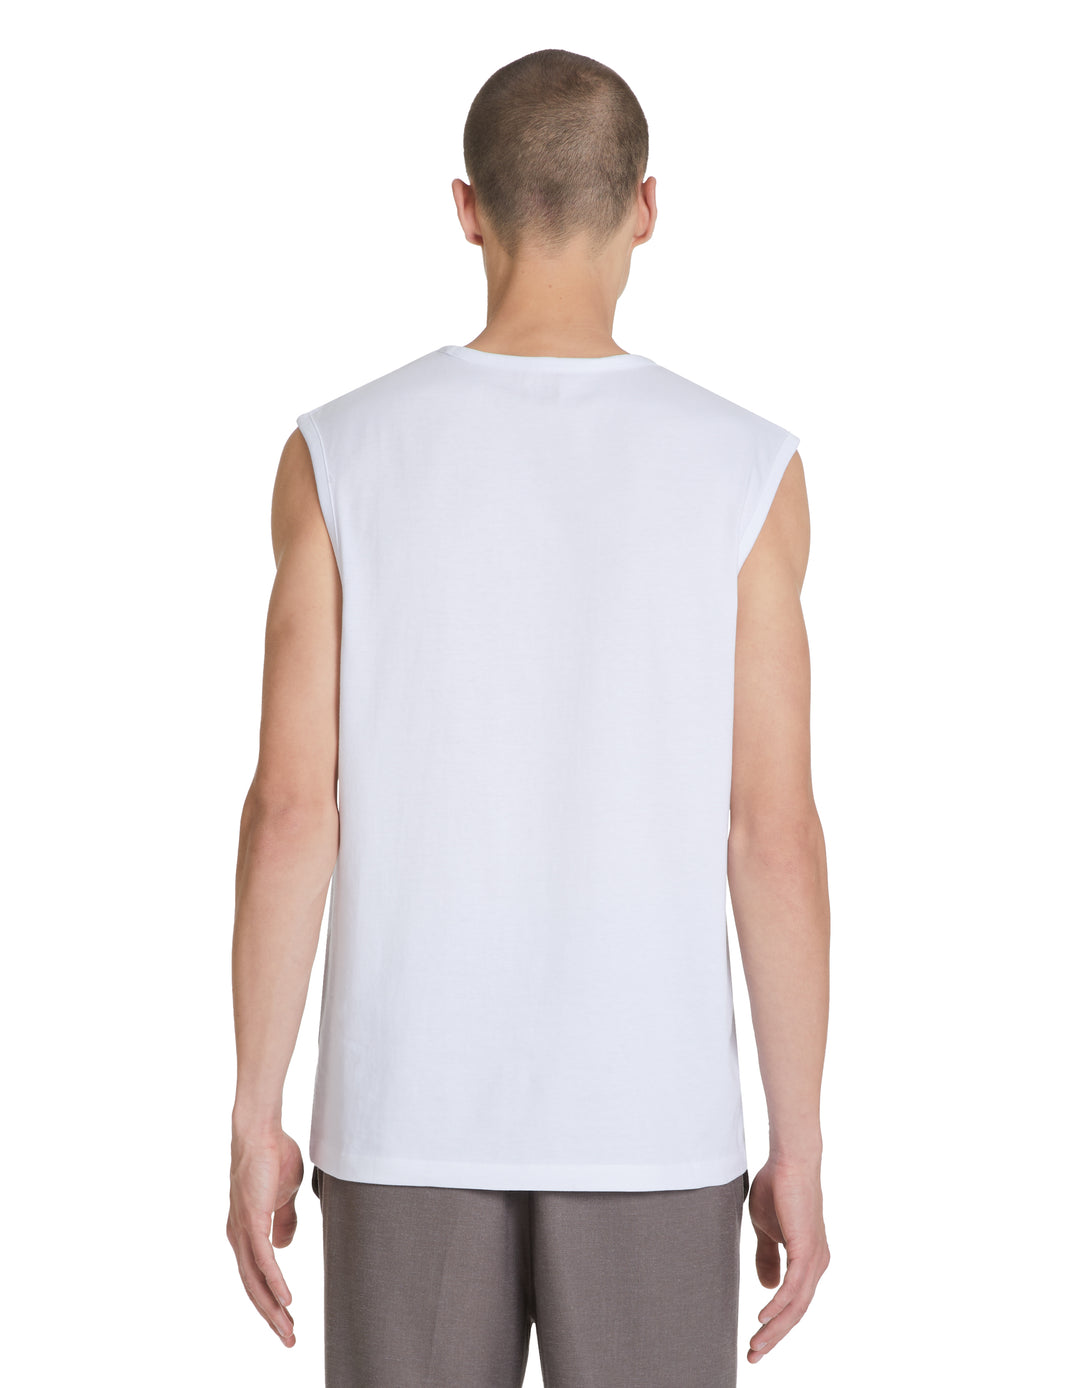 Unisex - Knitted - T-Shirt - no sleeves - U / V / round neck